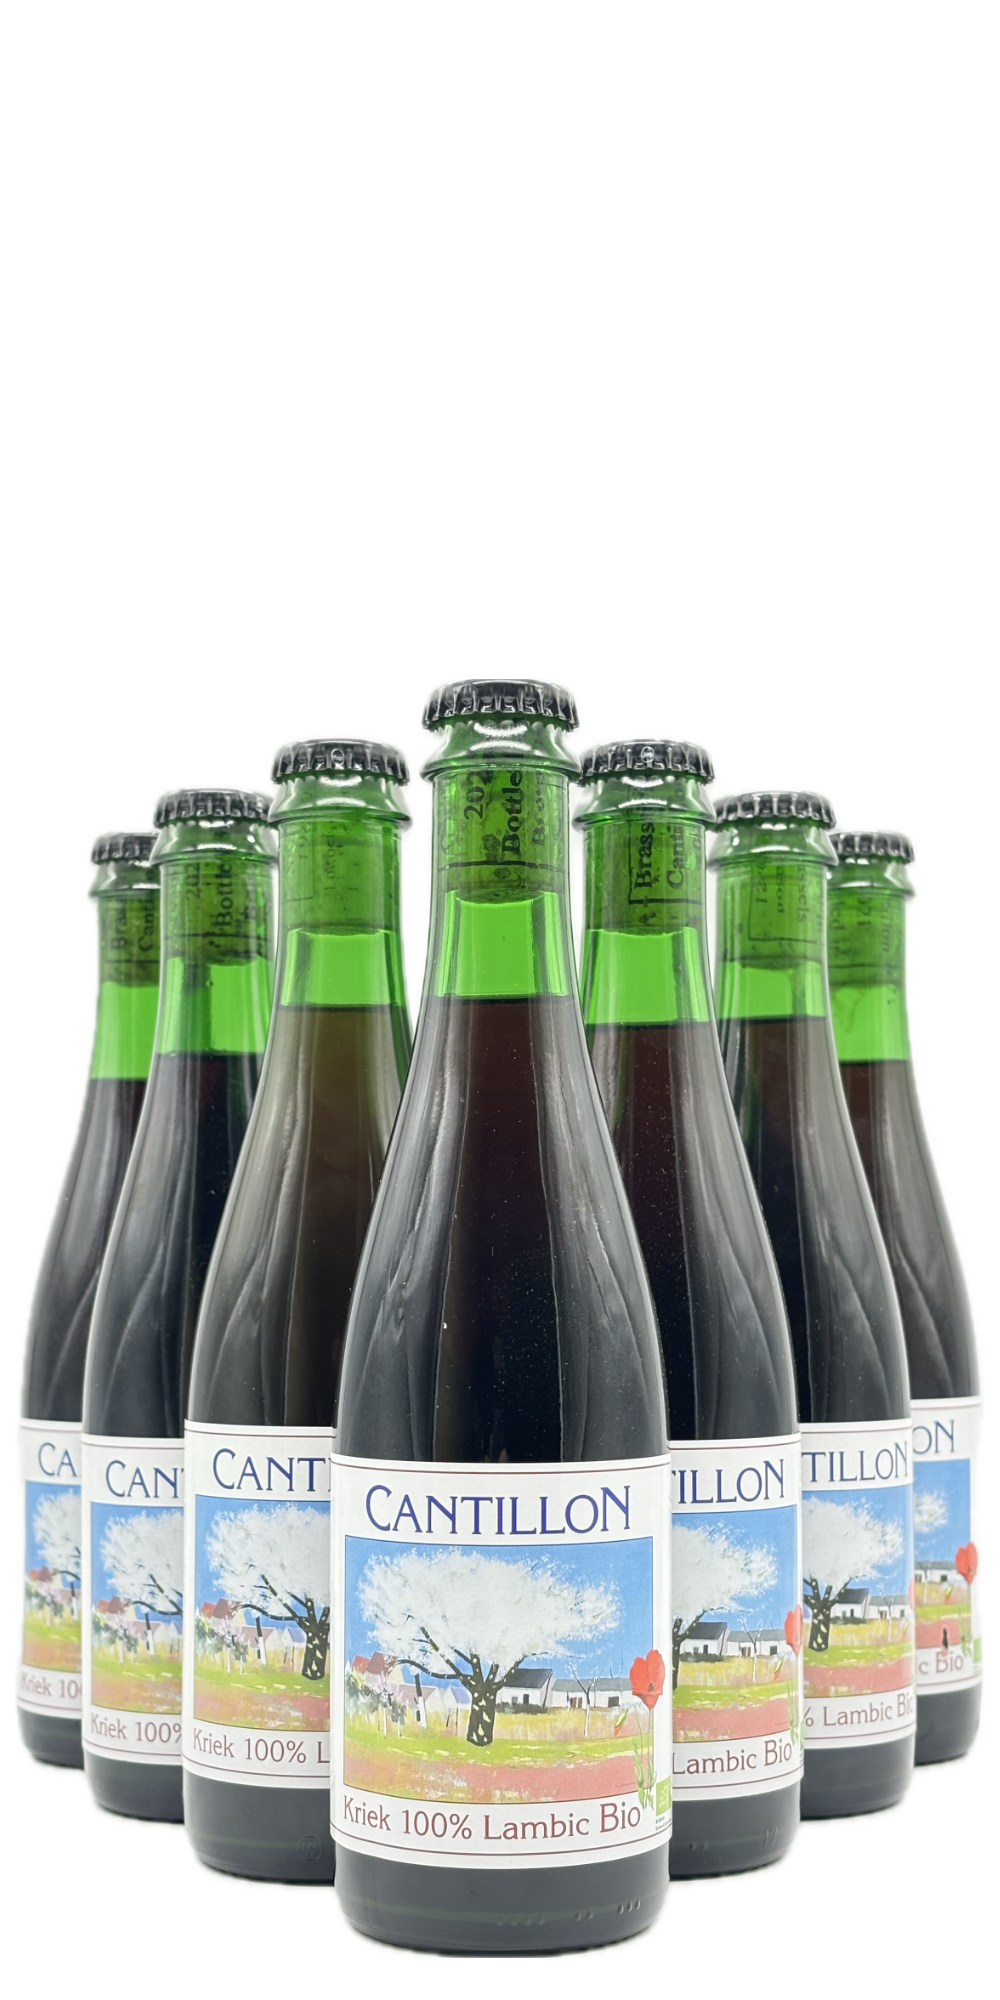 Cantillon - Kriek 7 bottle bundle (subscribers only)